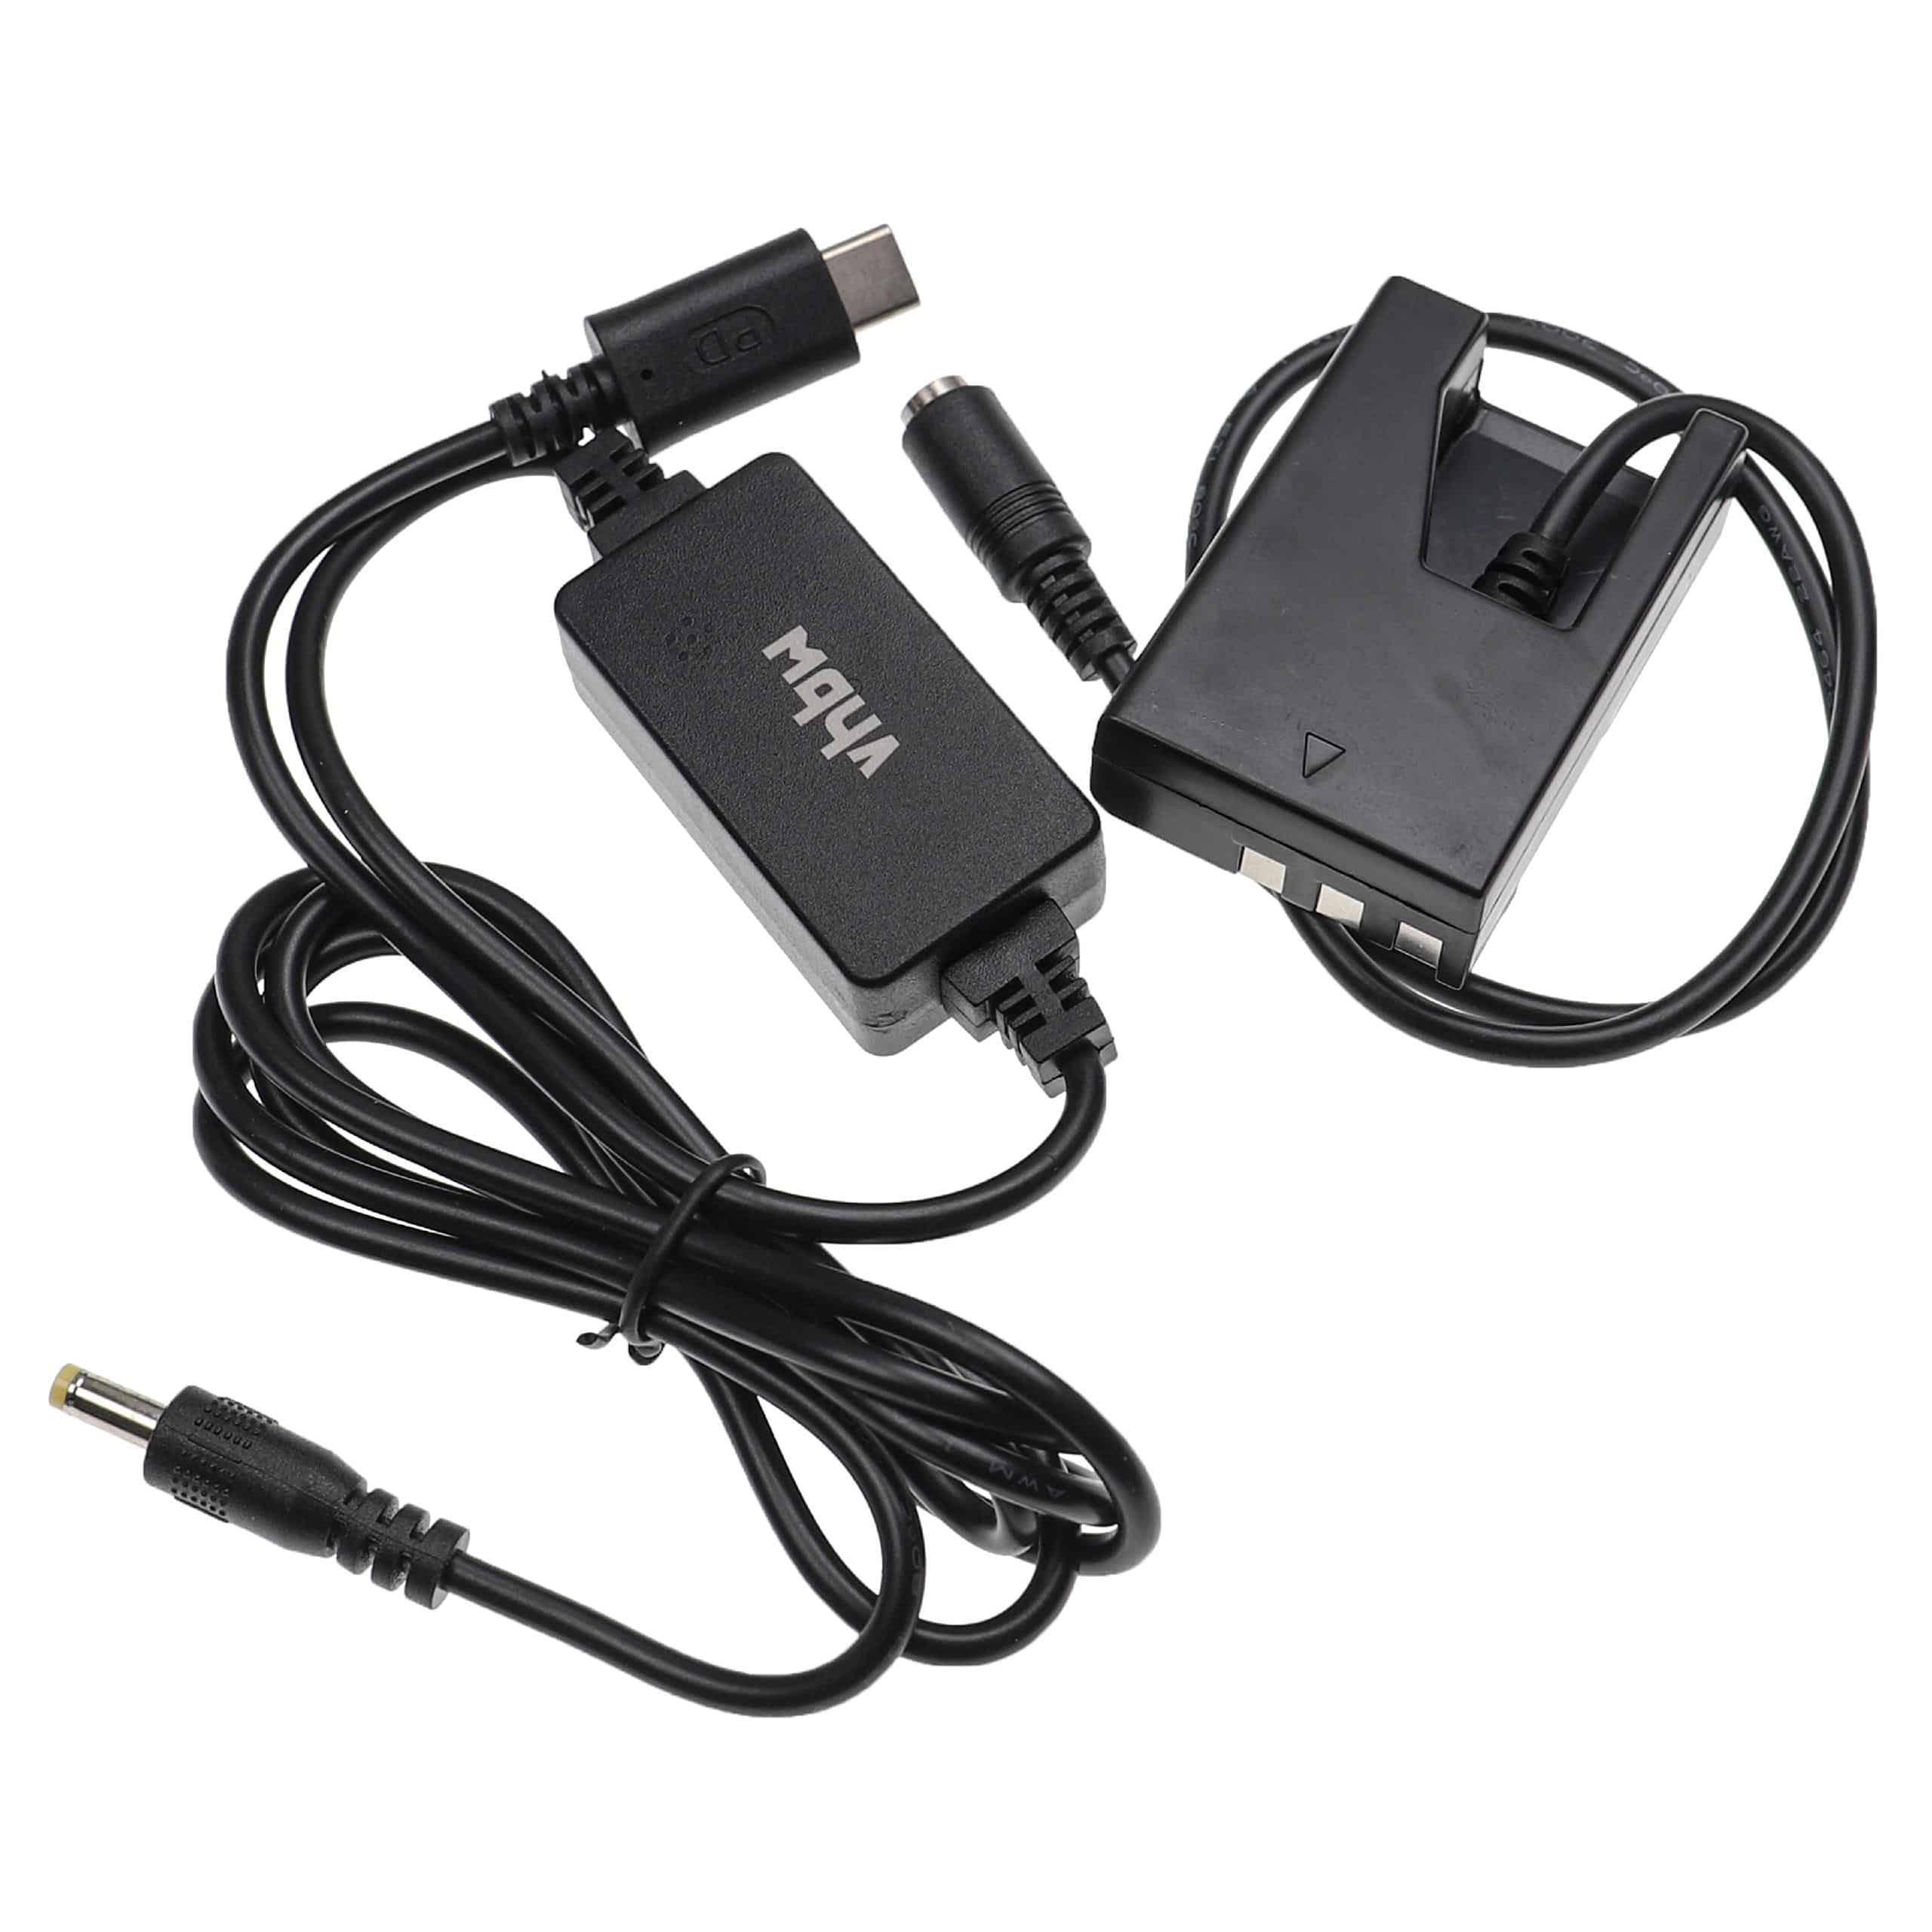 Fuente alimentación USB reemplaza Nikon EH-5A, EH-5 para cámaras + acoplador CC reemplaza Nikon EP-5